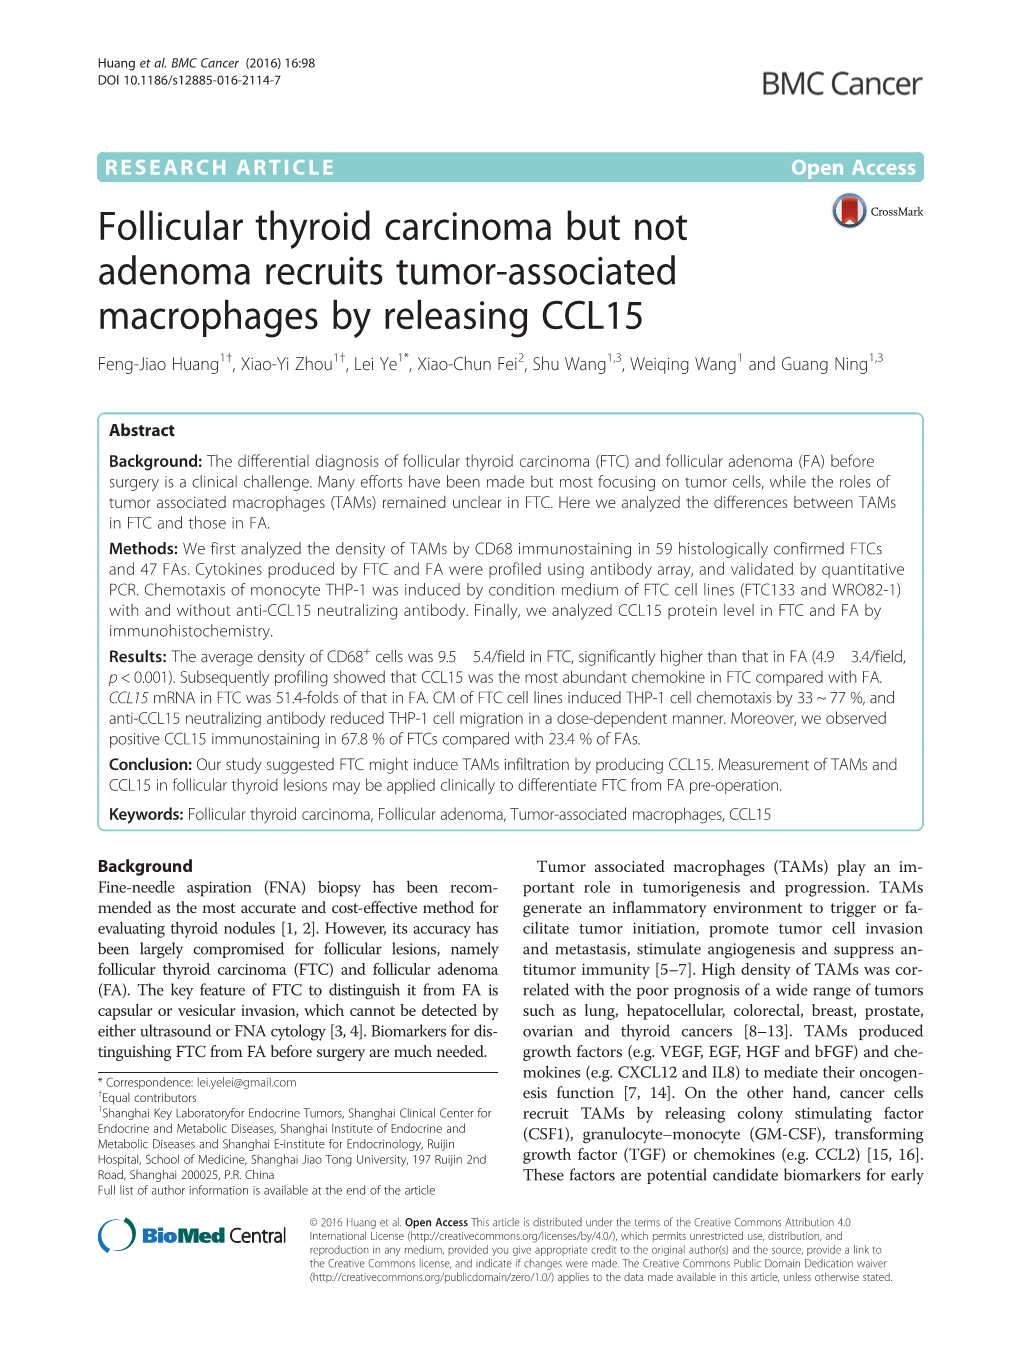 Follicular Thyroid Carcinoma but Not Adenoma Recruits Tumor-Associated